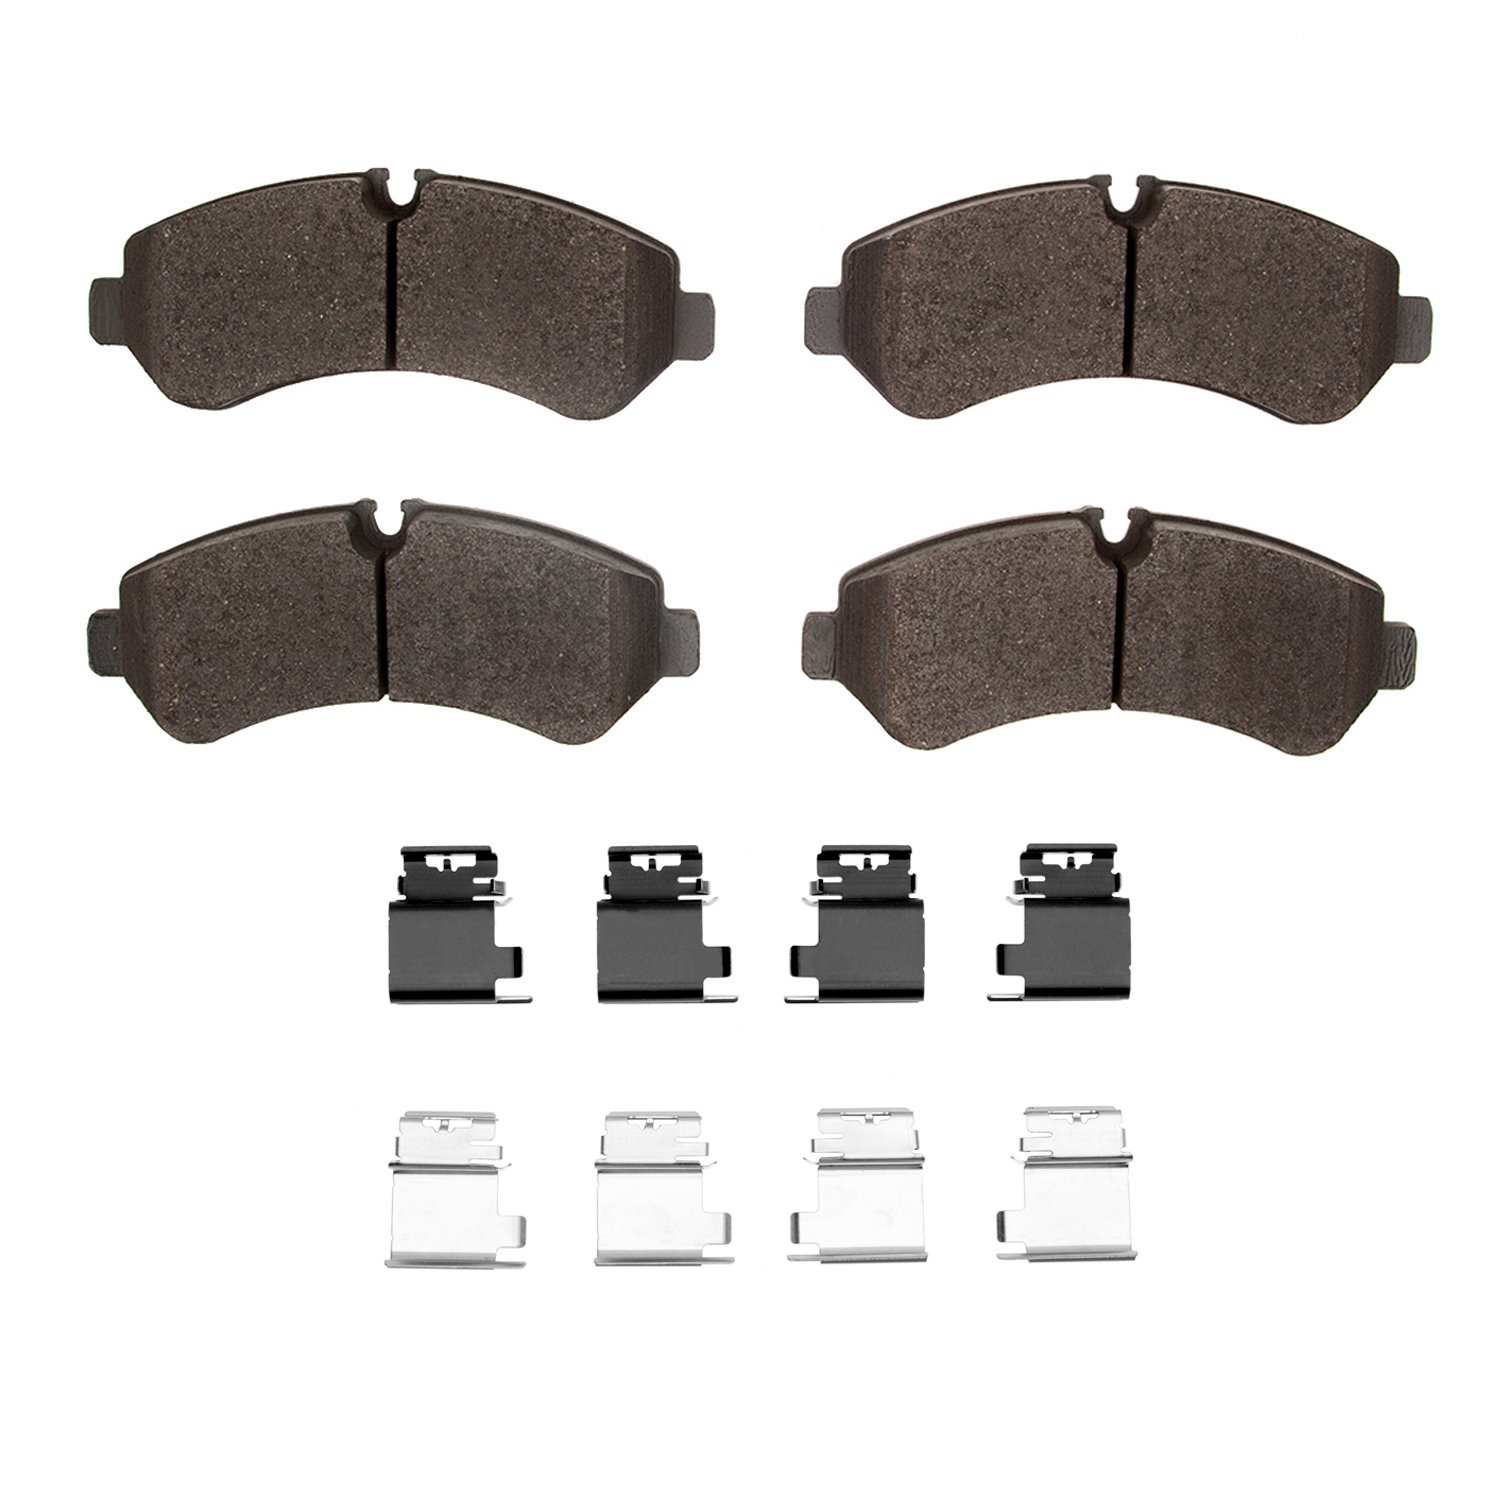 1551-2236-01 5000 Advanced Semi-Metallic Brake Pads & Hardware Kit, Fits Select Multiple Makes/Models, Position: Rear,Rr